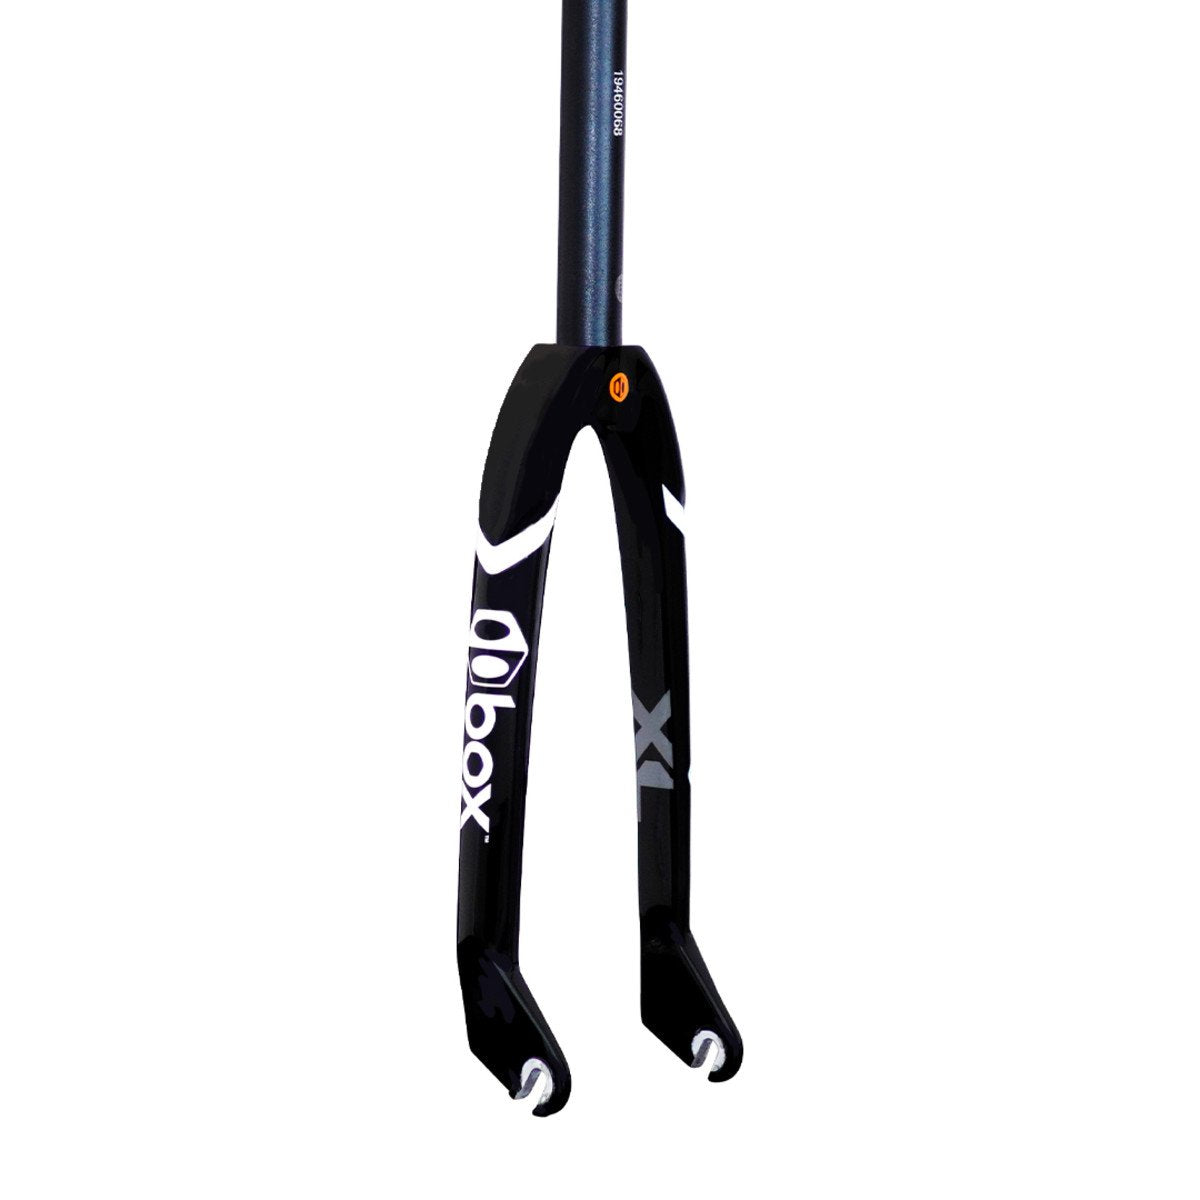 20" x 10mm Box XL Pro Carbon Fiber BMX Race Fork - 1-1/8" Threadless - Black